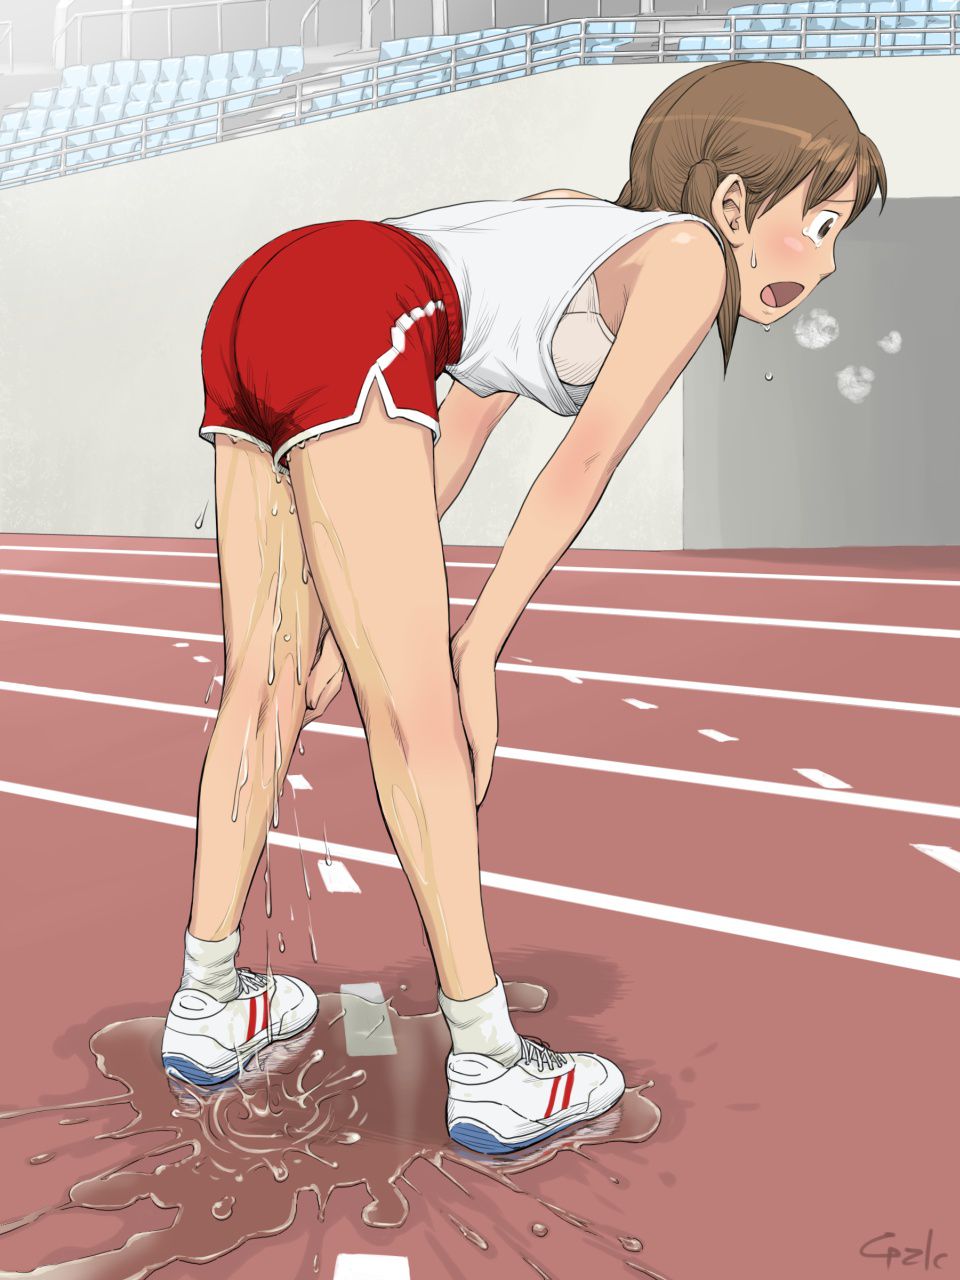 Sexy anime girls peeing